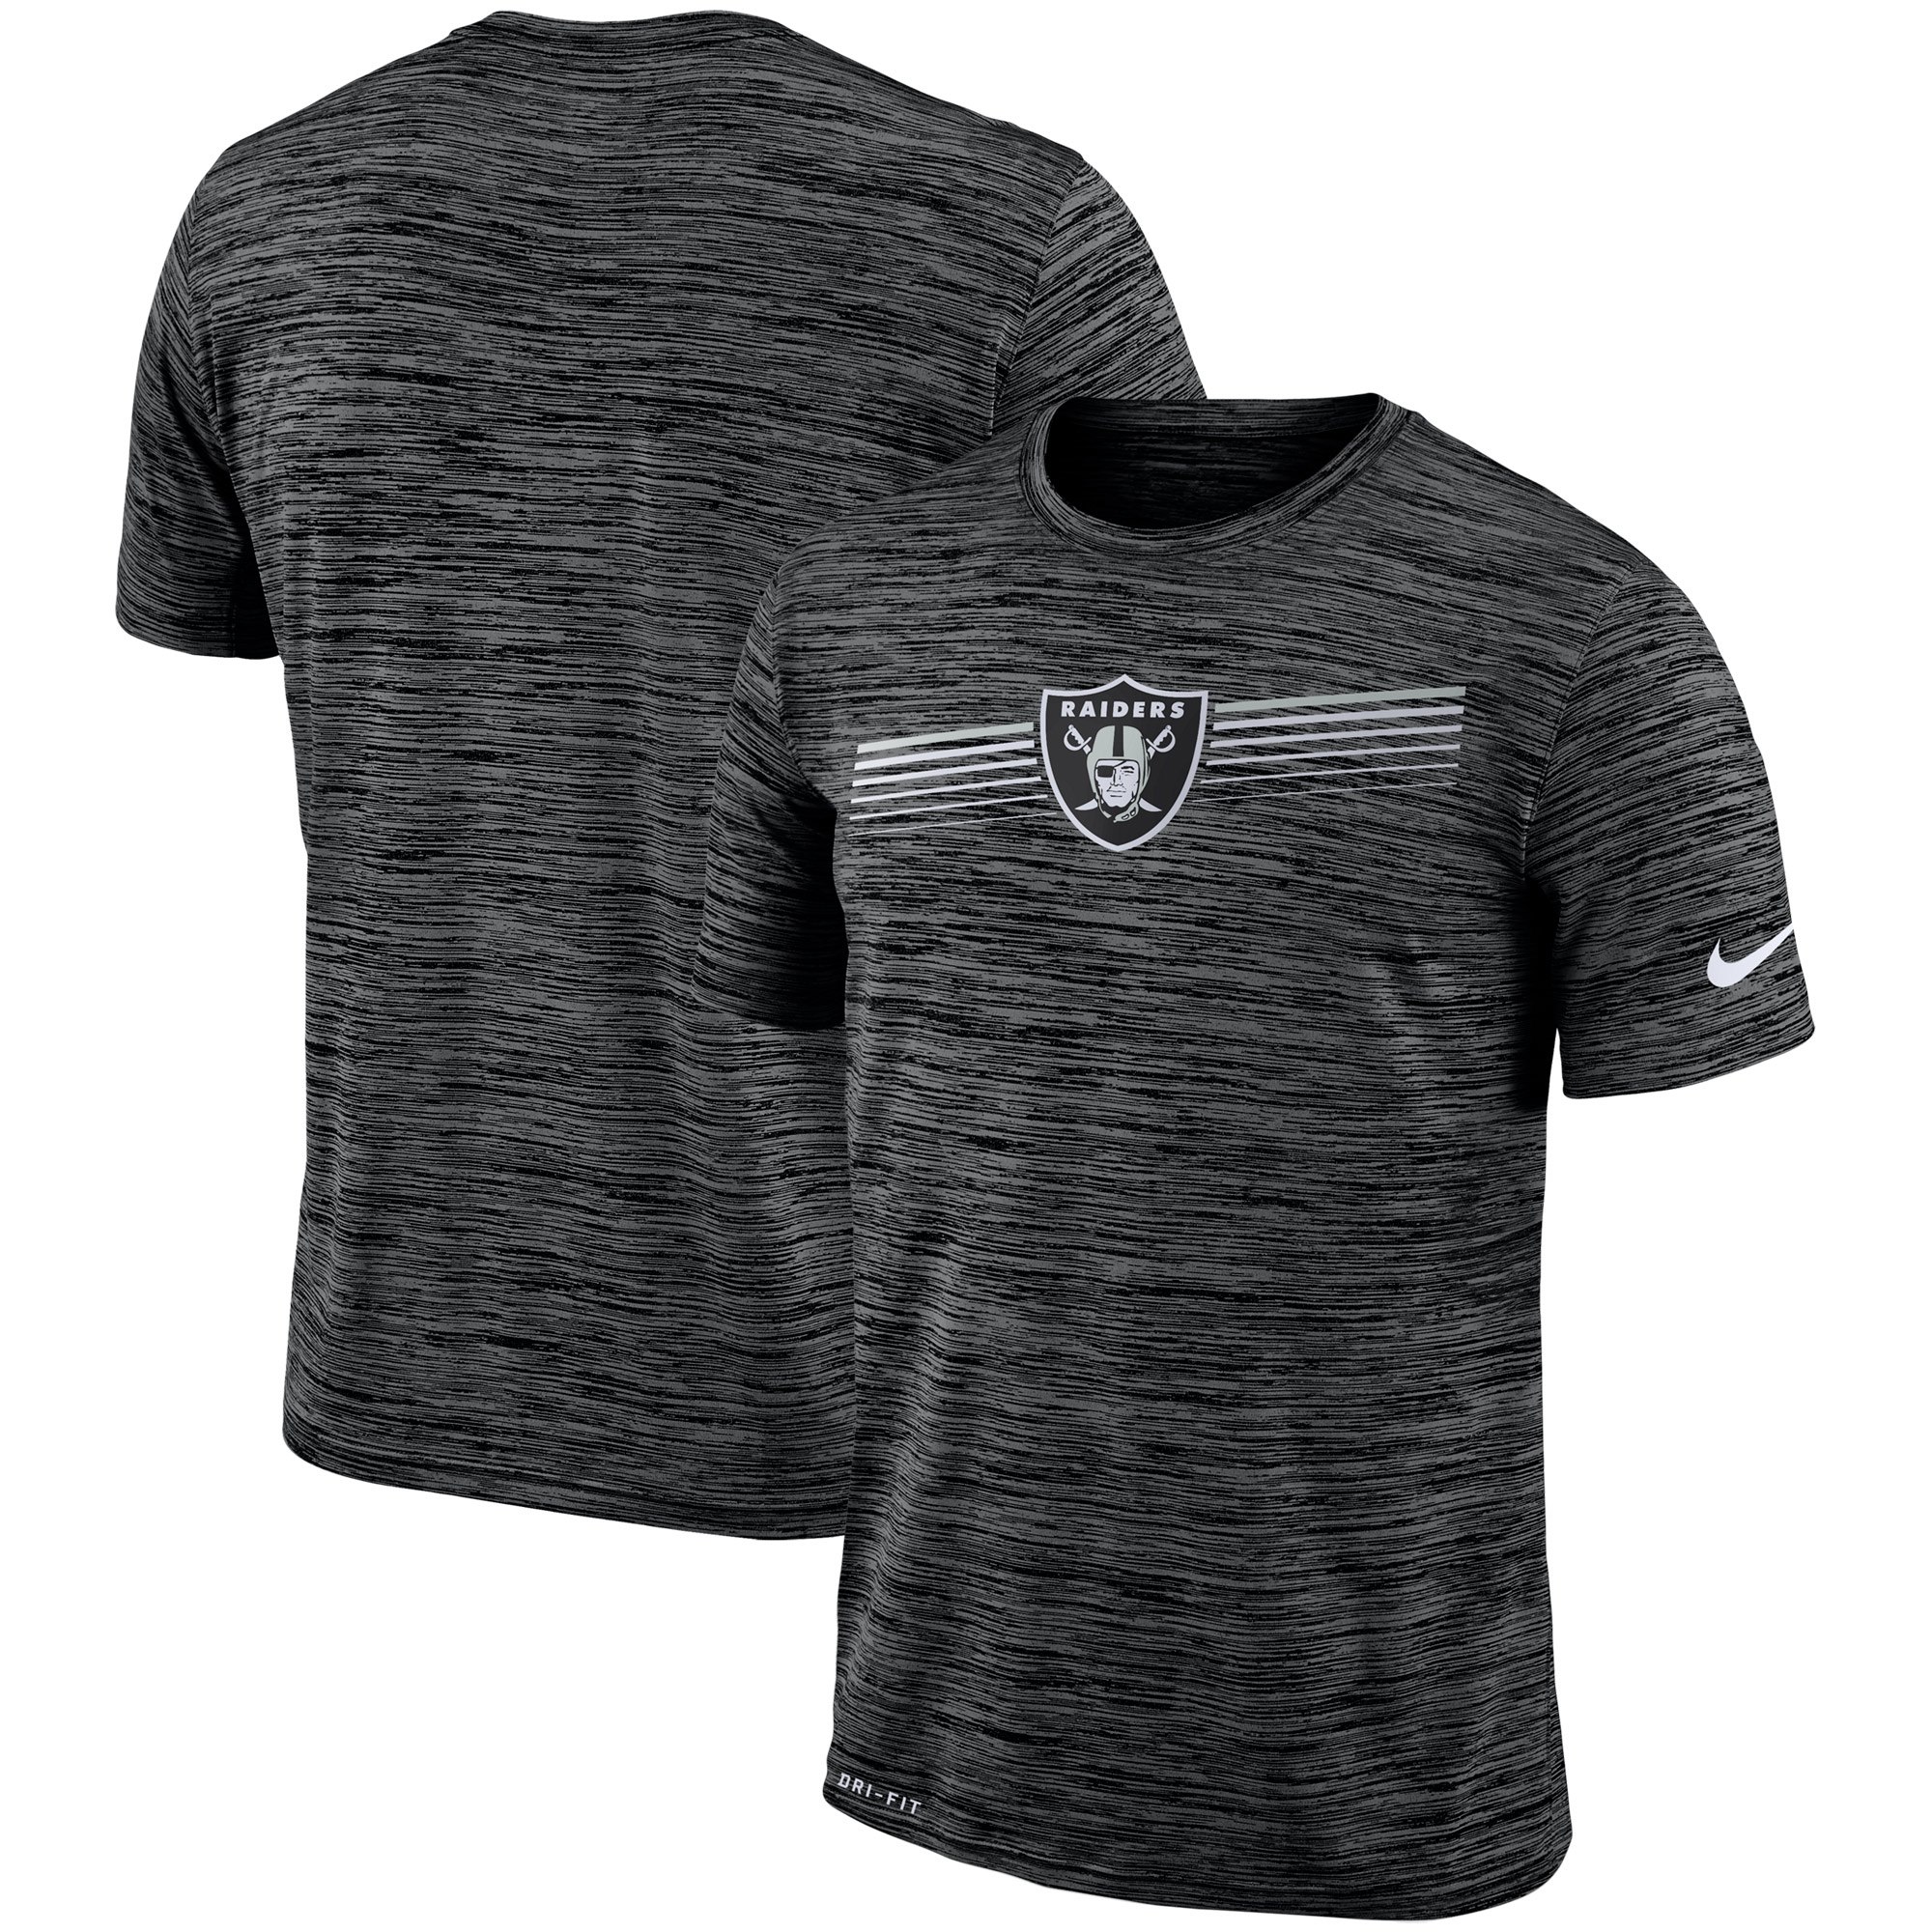 Oakland Raiders Nike Sideline Velocity Performance T-Shirt Heathered Black